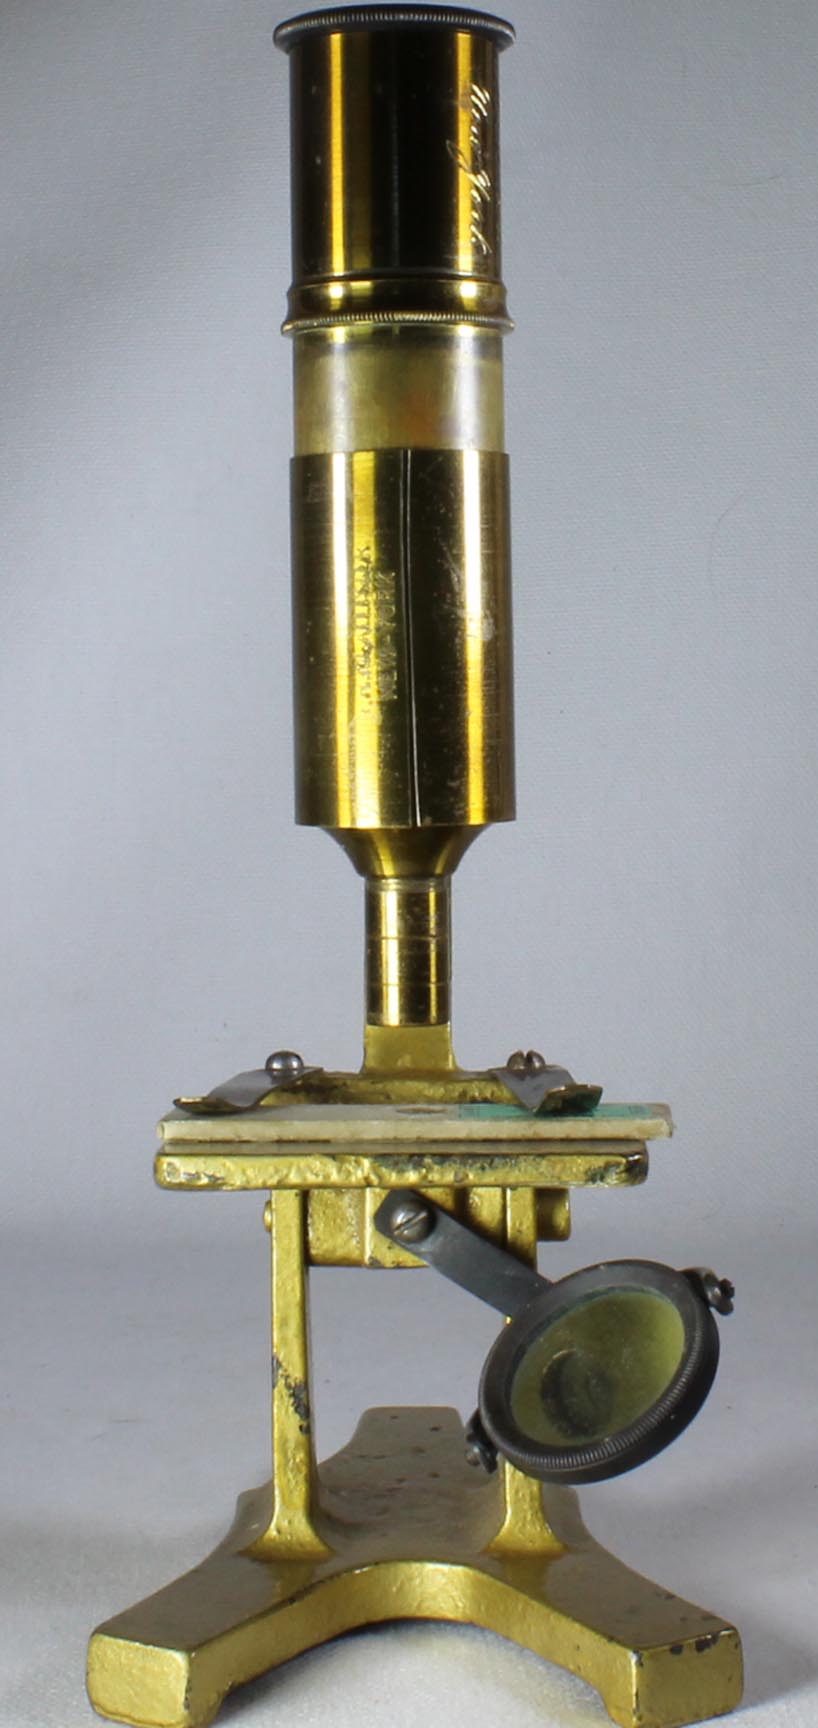 McAllister's Household Portable Microscope